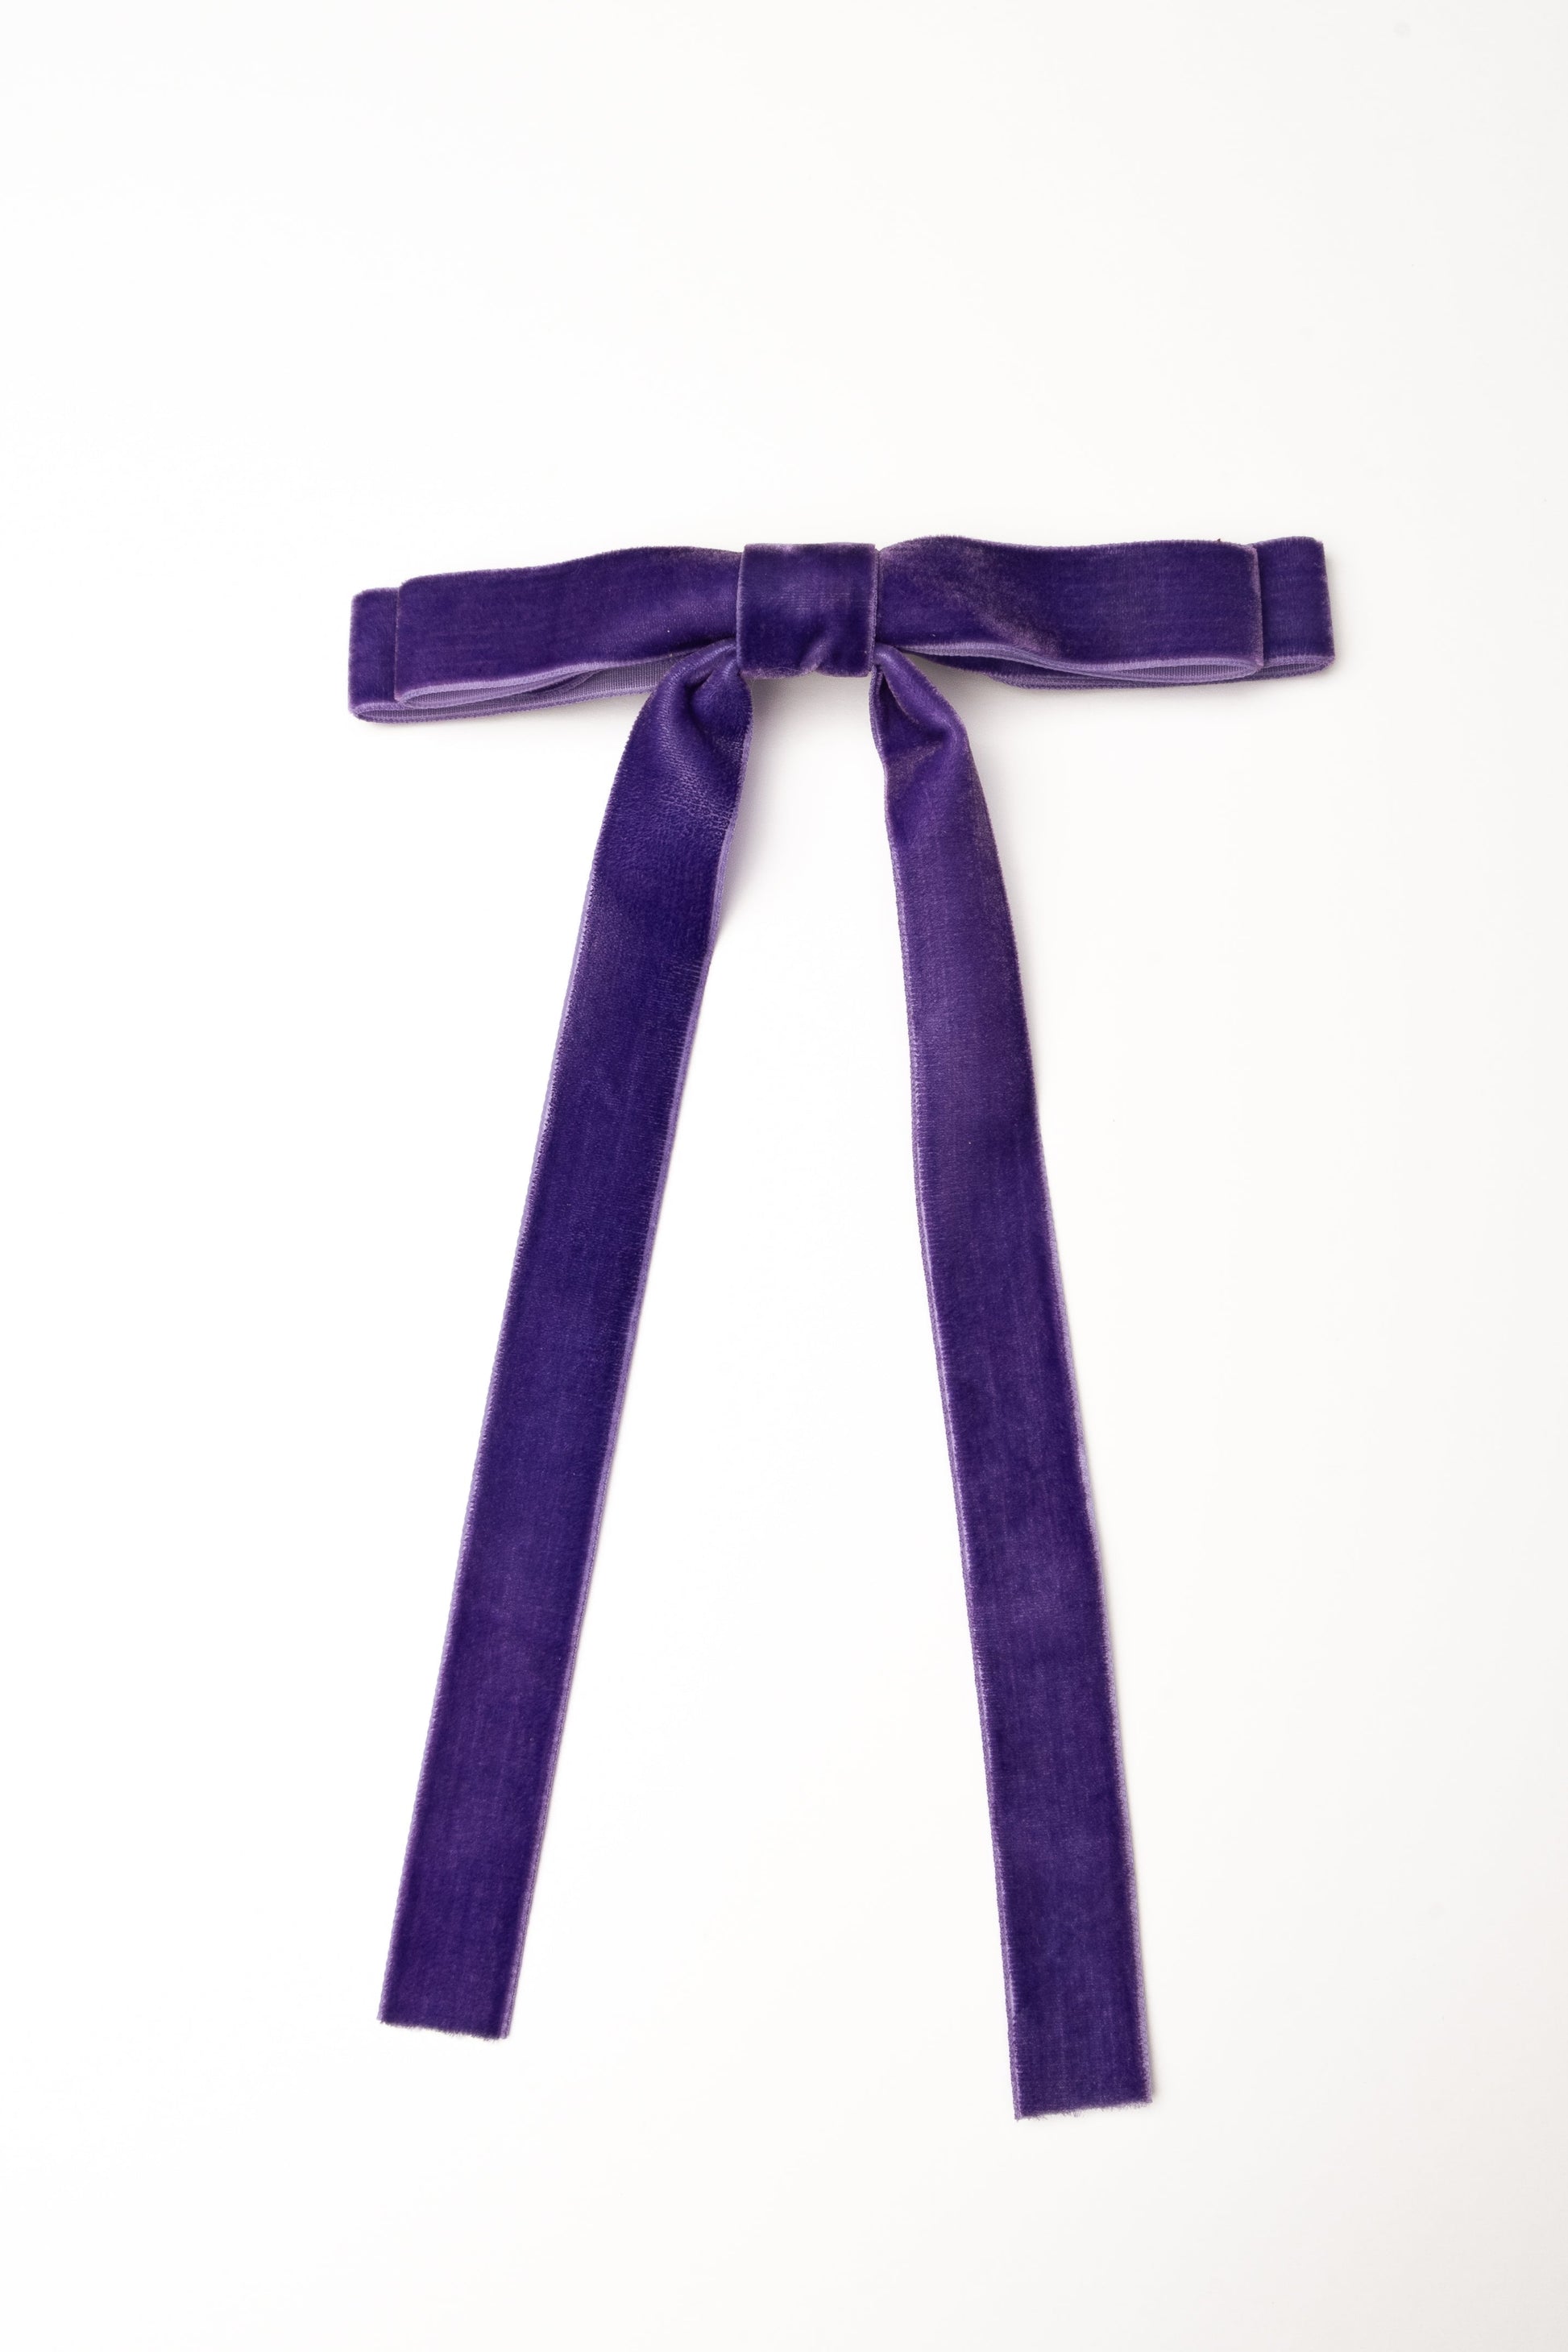 Velvet Hair Bow WOMEN'S HAIR ACCESSORY Cove Accessories Purple 6" wide x 8" long 